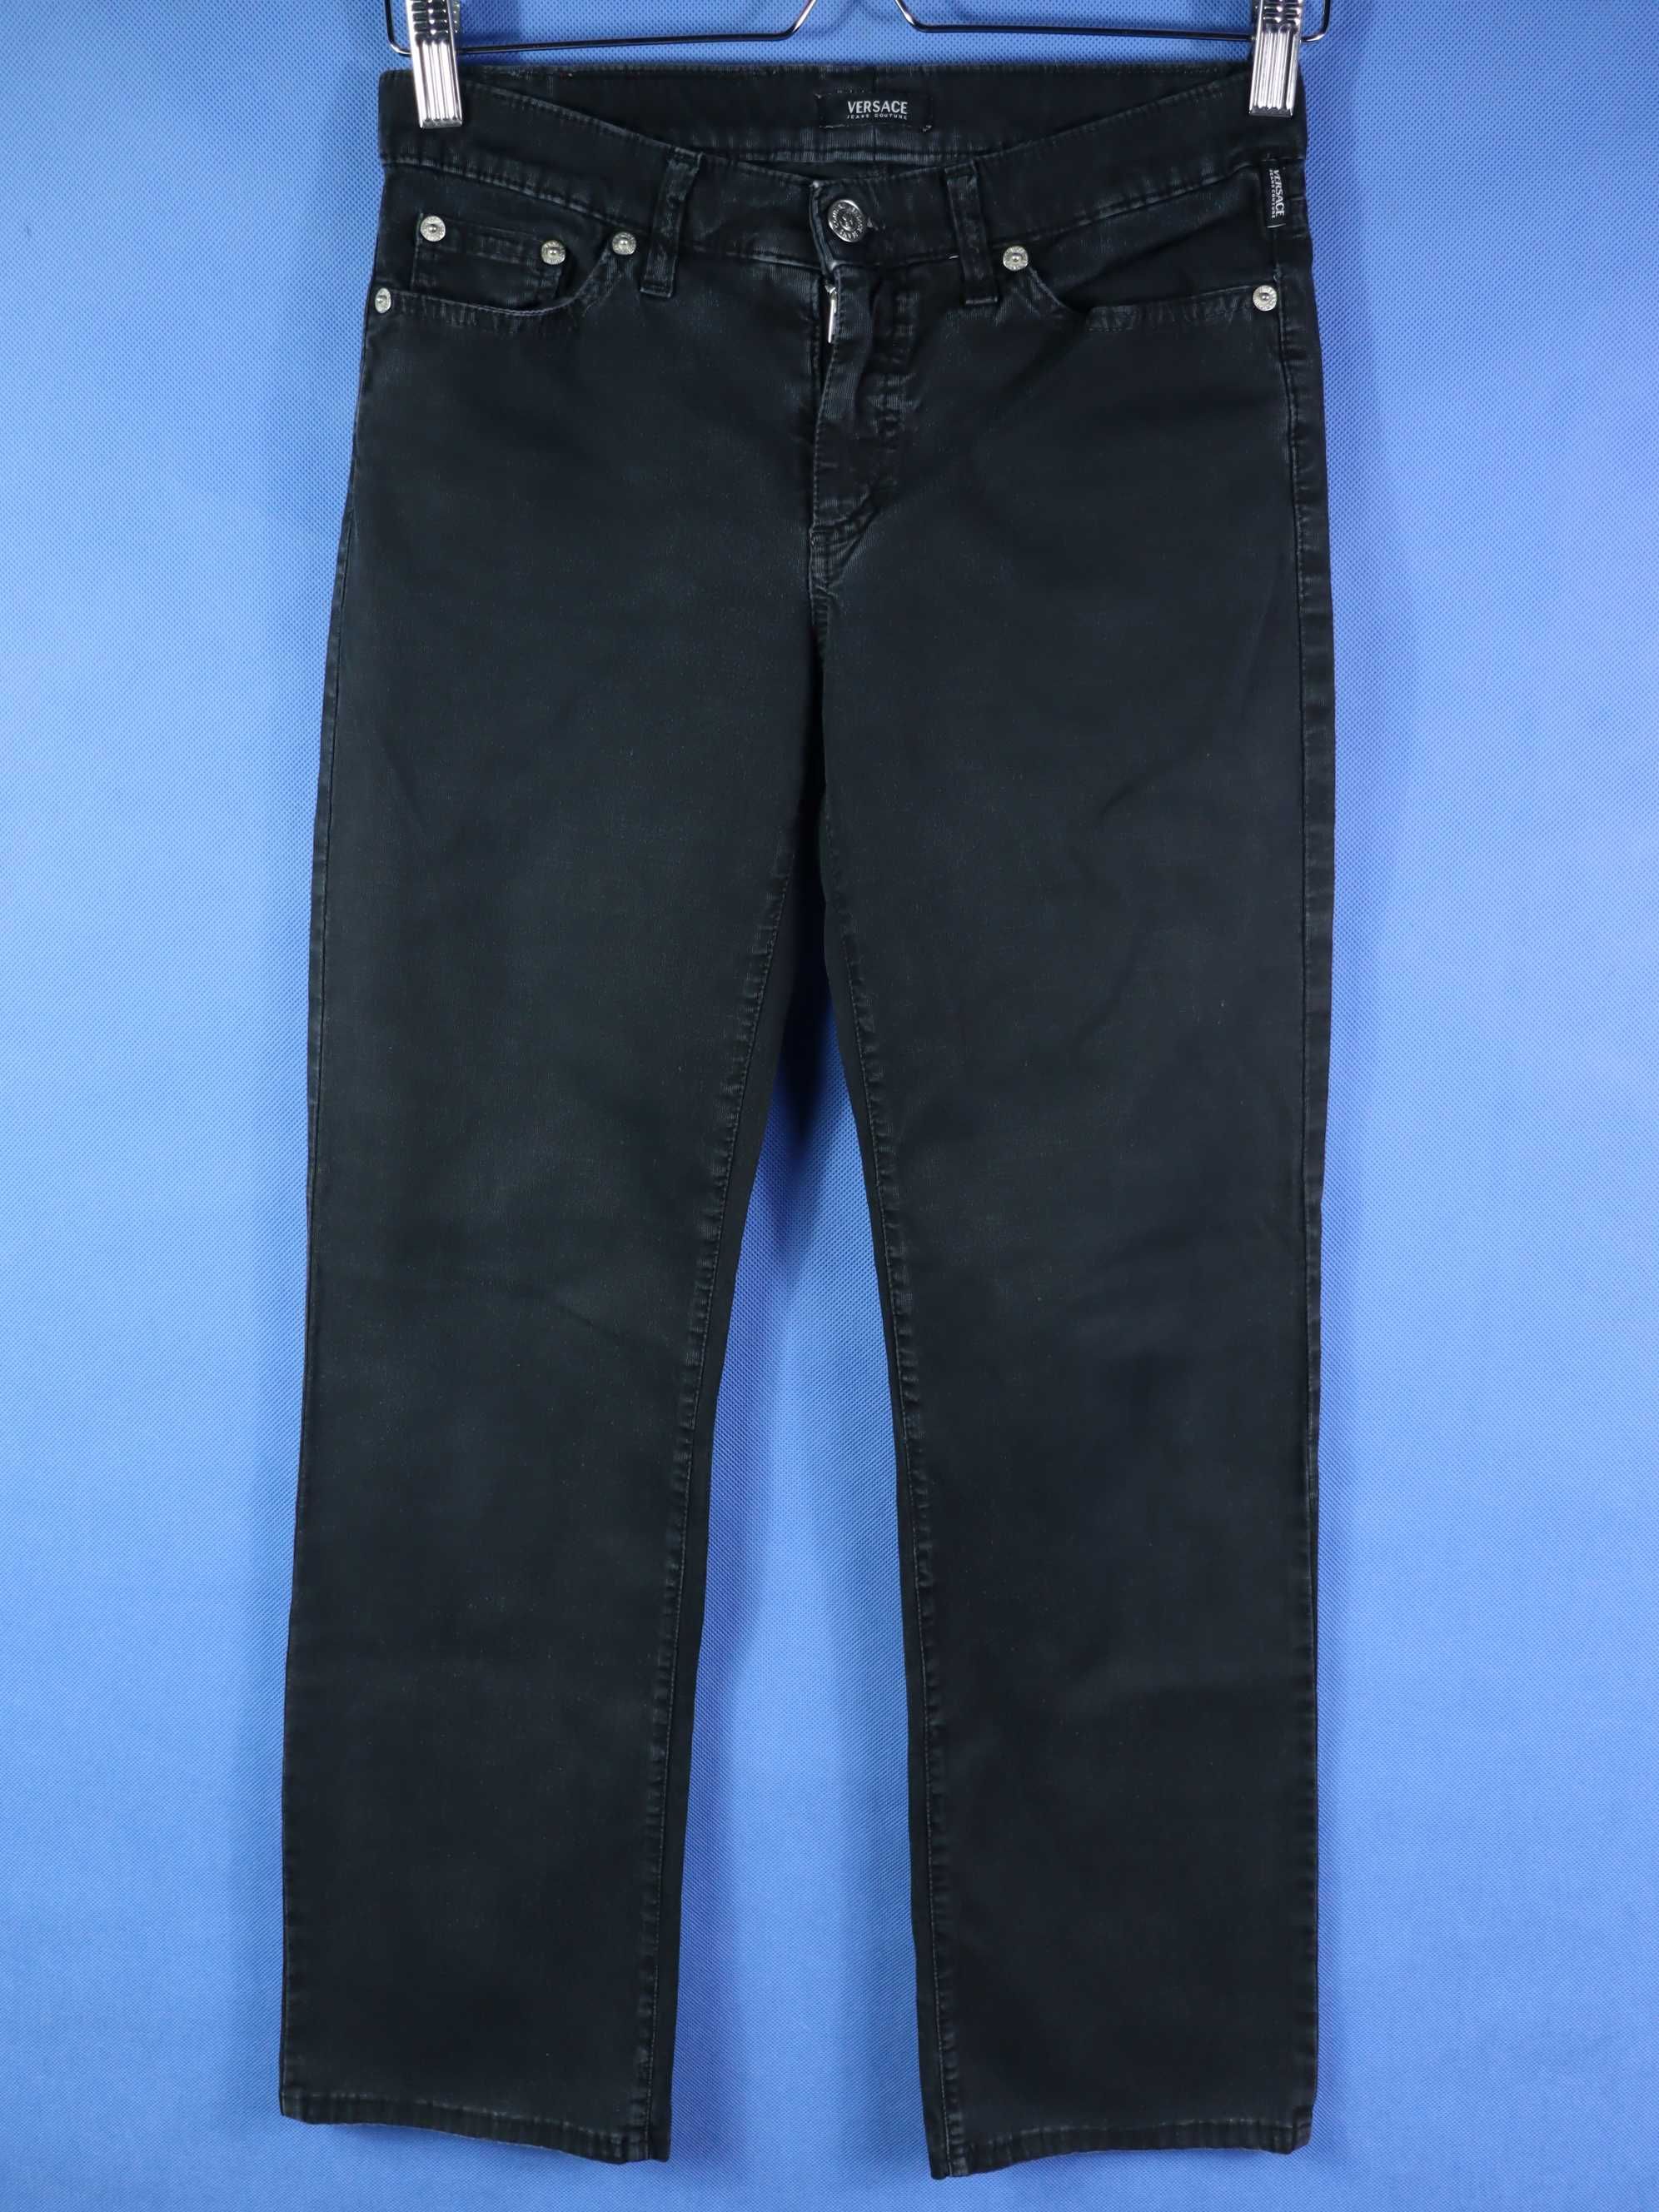 Versace Jeans couture damskie spodnie jeansy szare washed stretch M 38